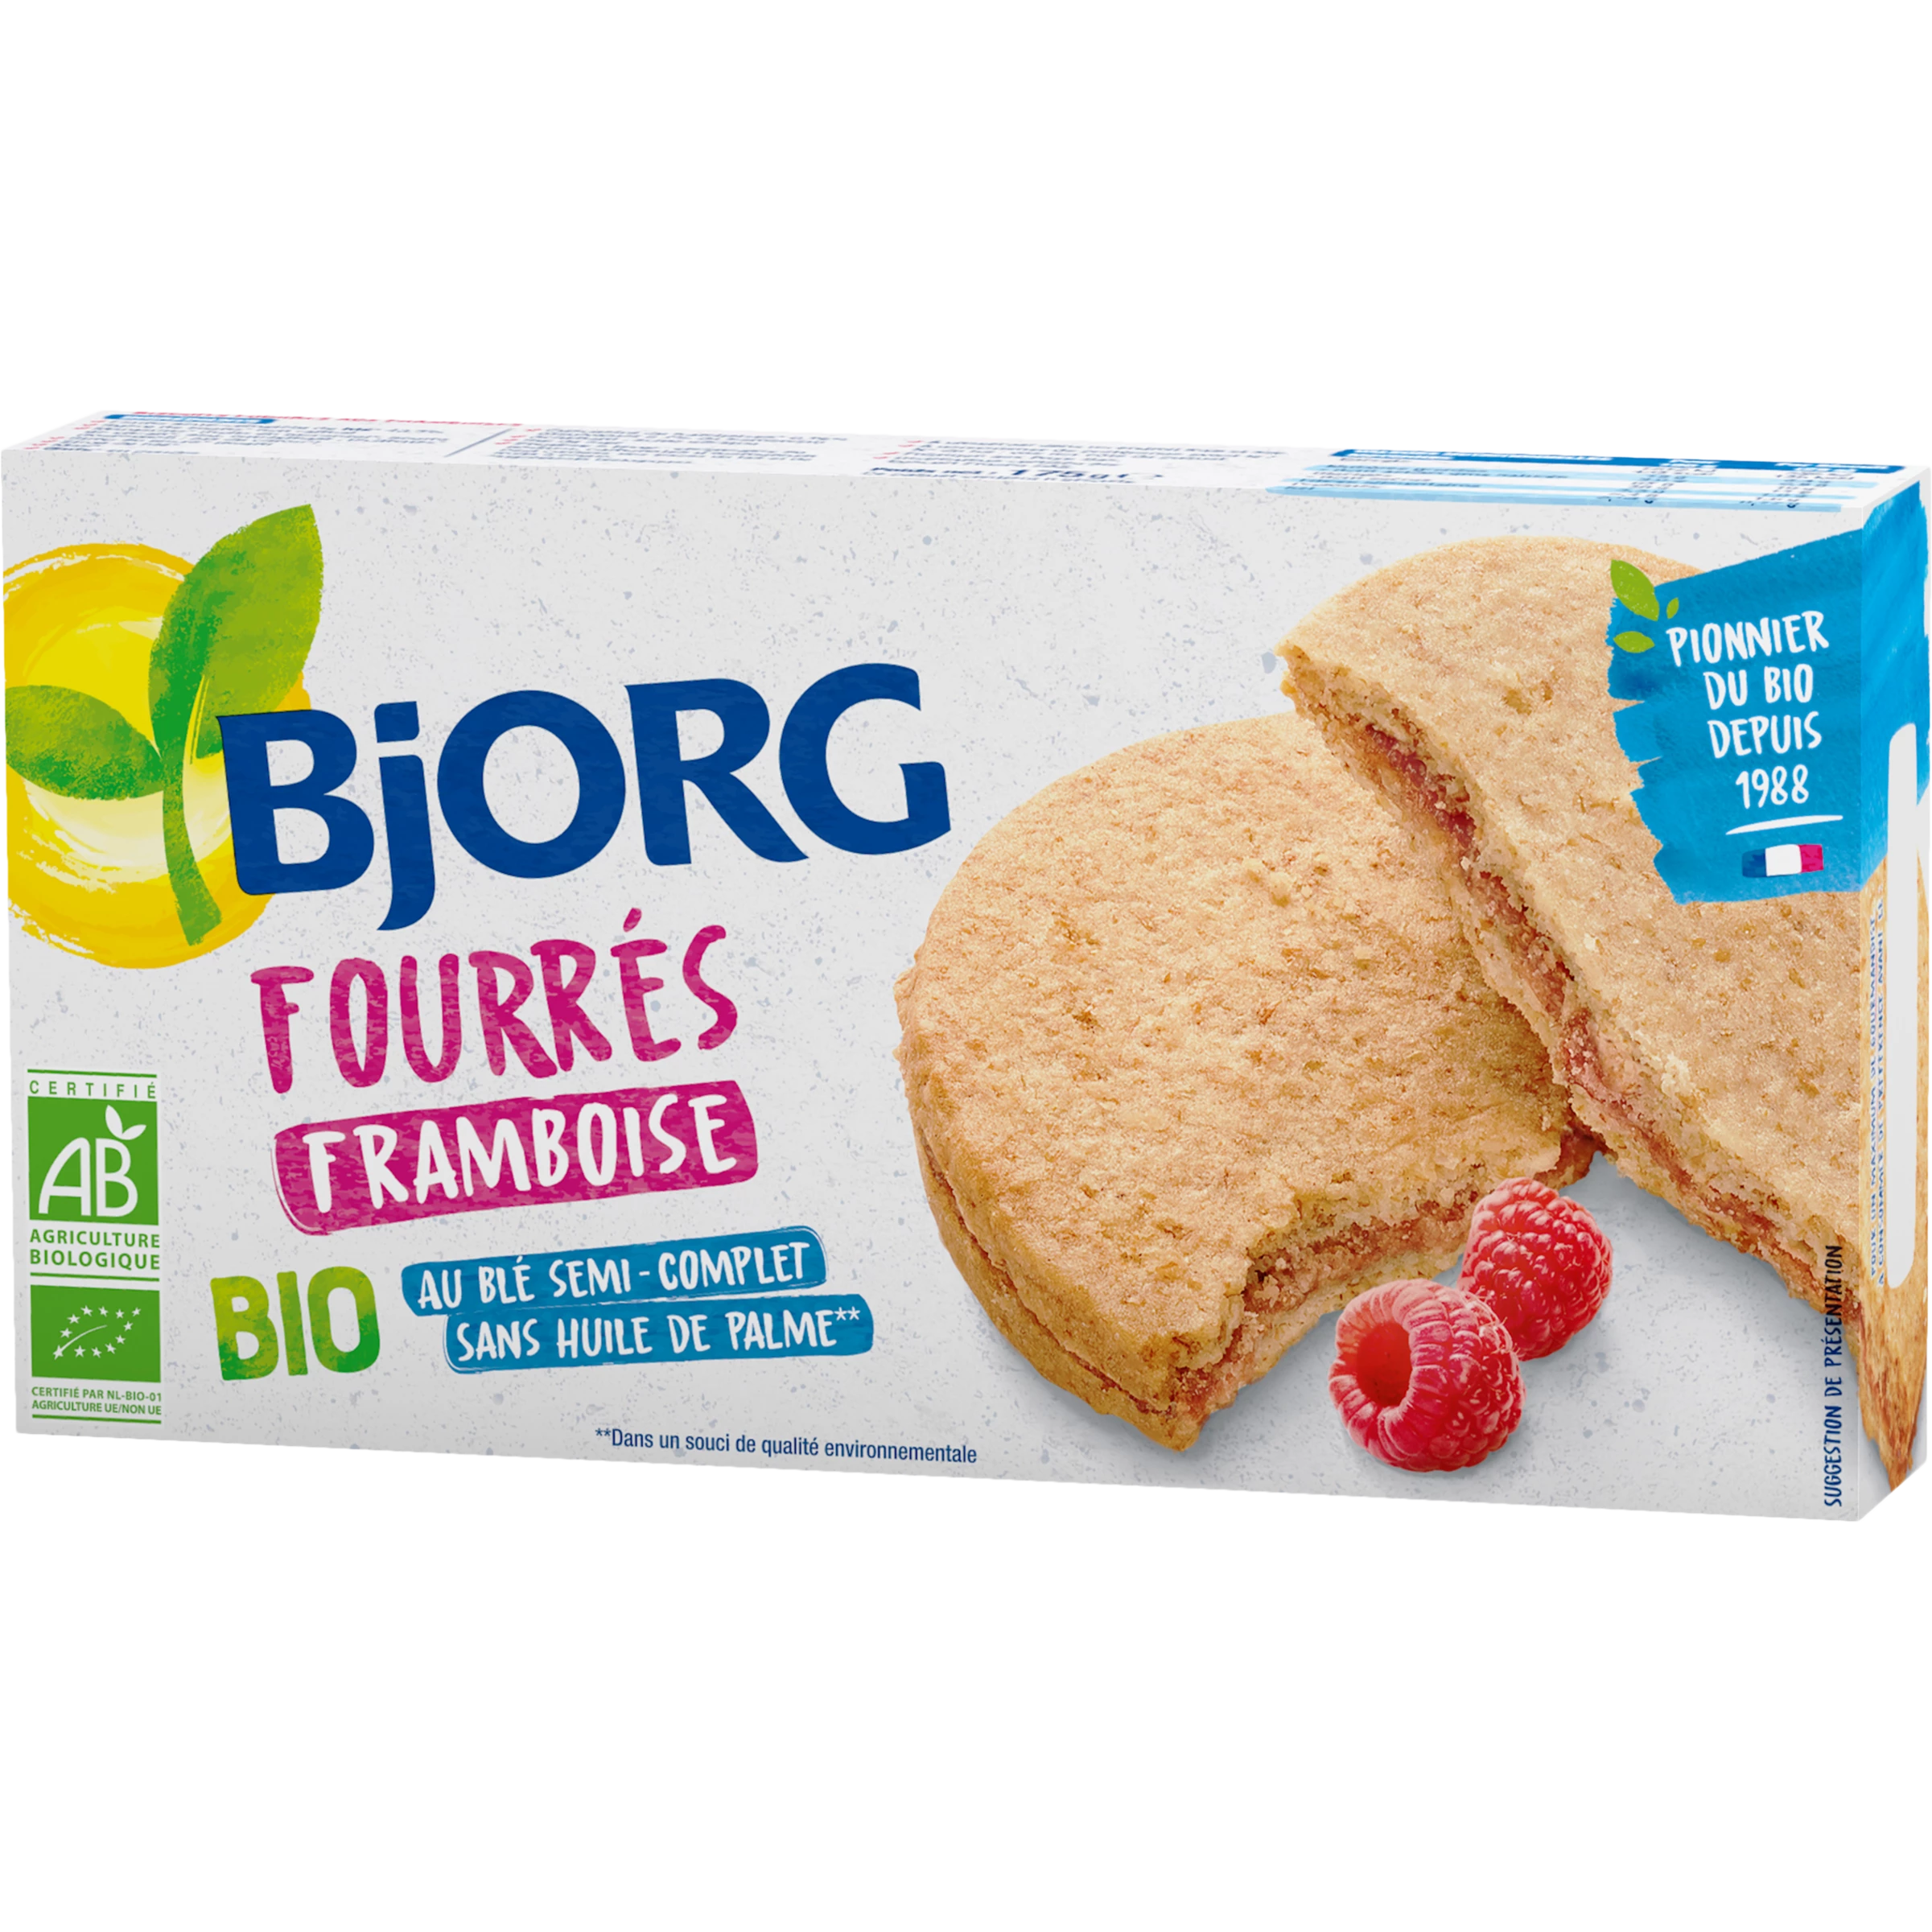 Biscuits fourrés framboise Bio, 175g, BJORG